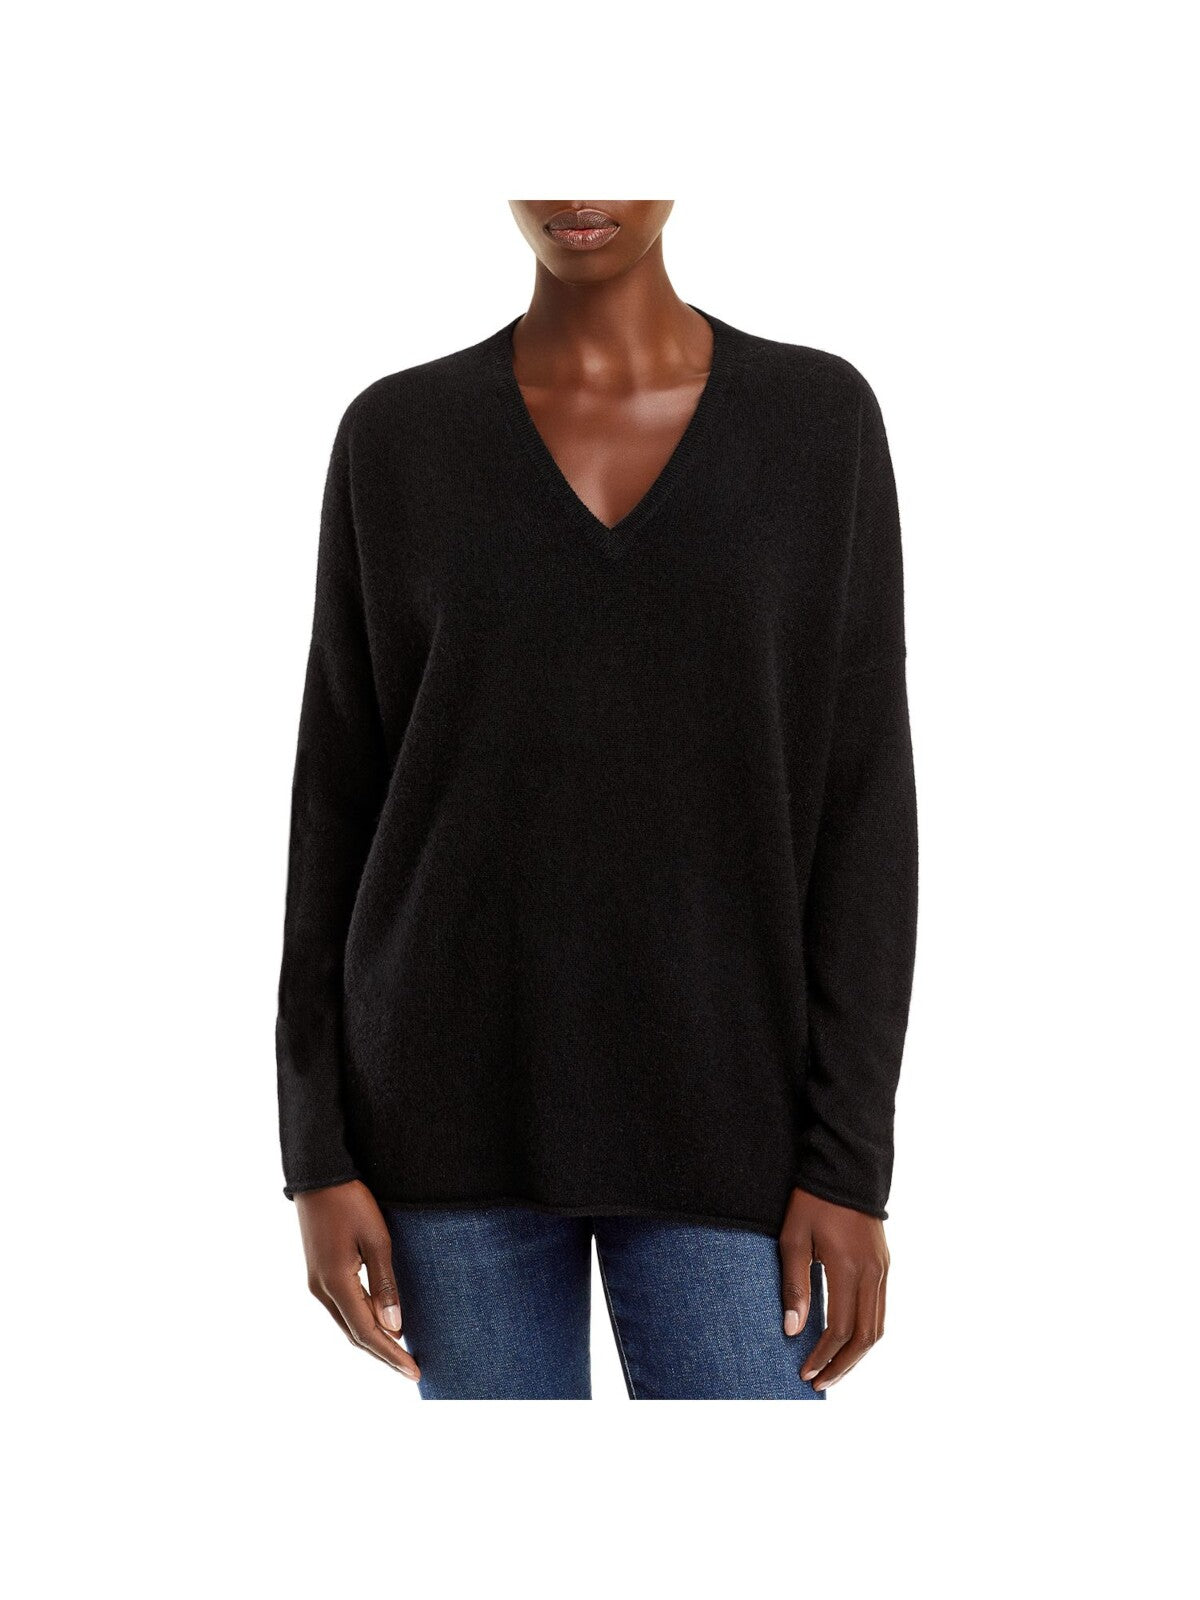 Designer Brand Womens Black Cashmere Long Sleeve V Neck Wear To Work Sweater S